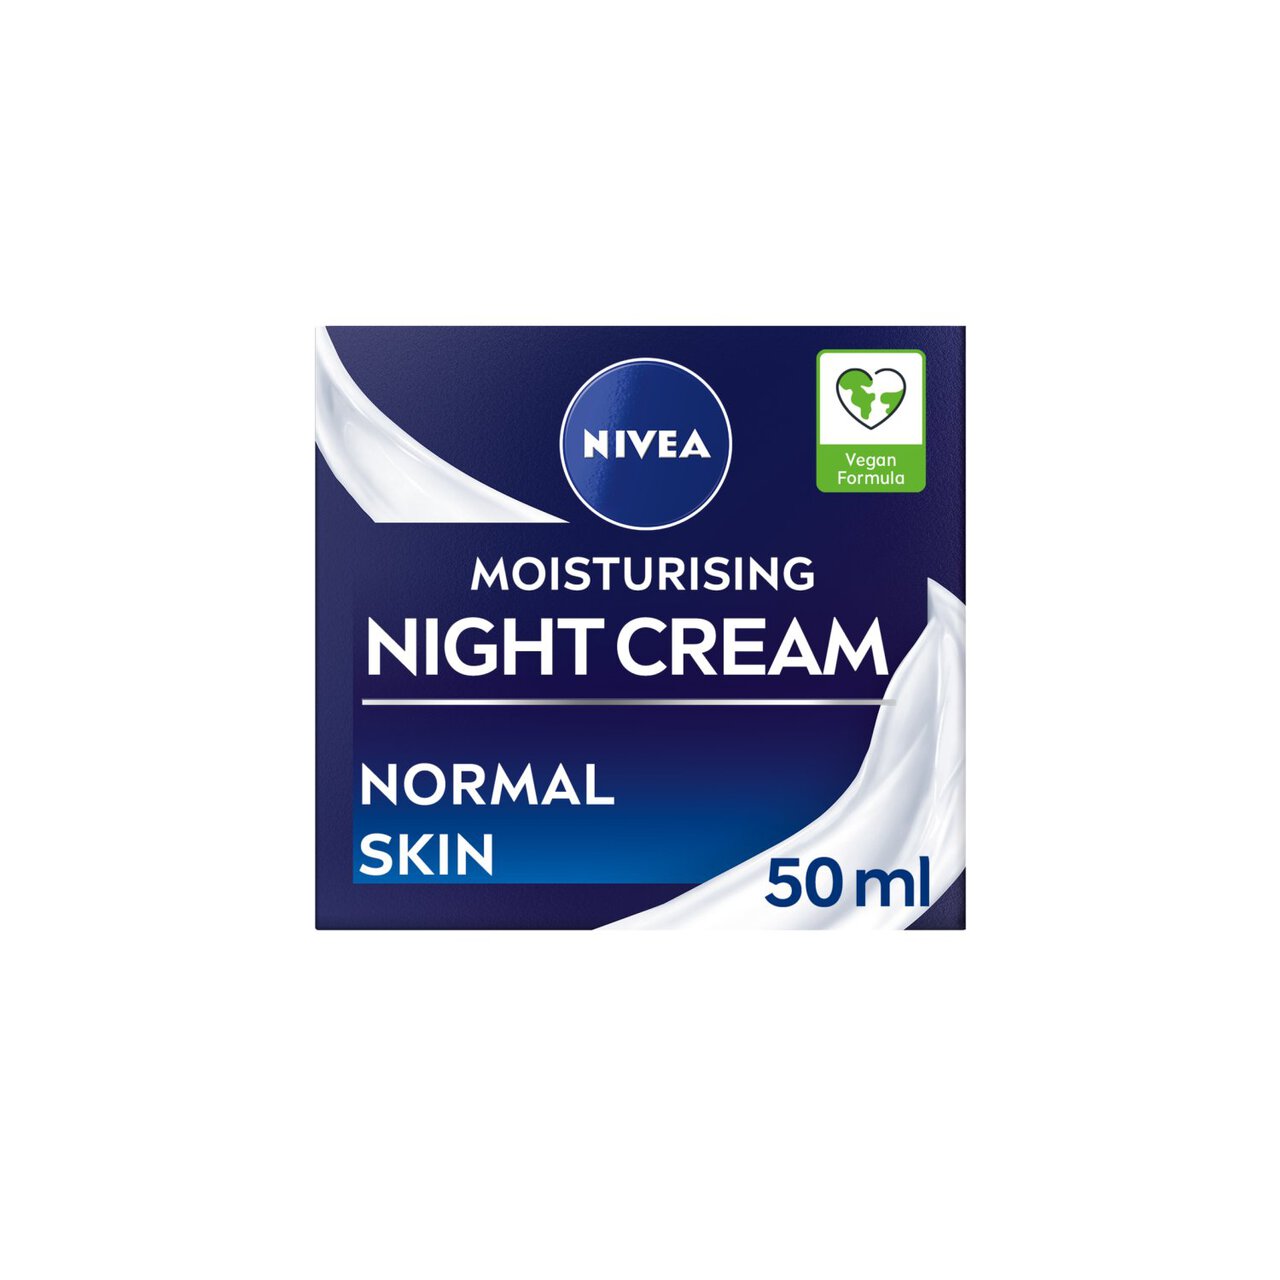 NIVEA Night Cream Face Moisturiser for Normal Skin 50ml